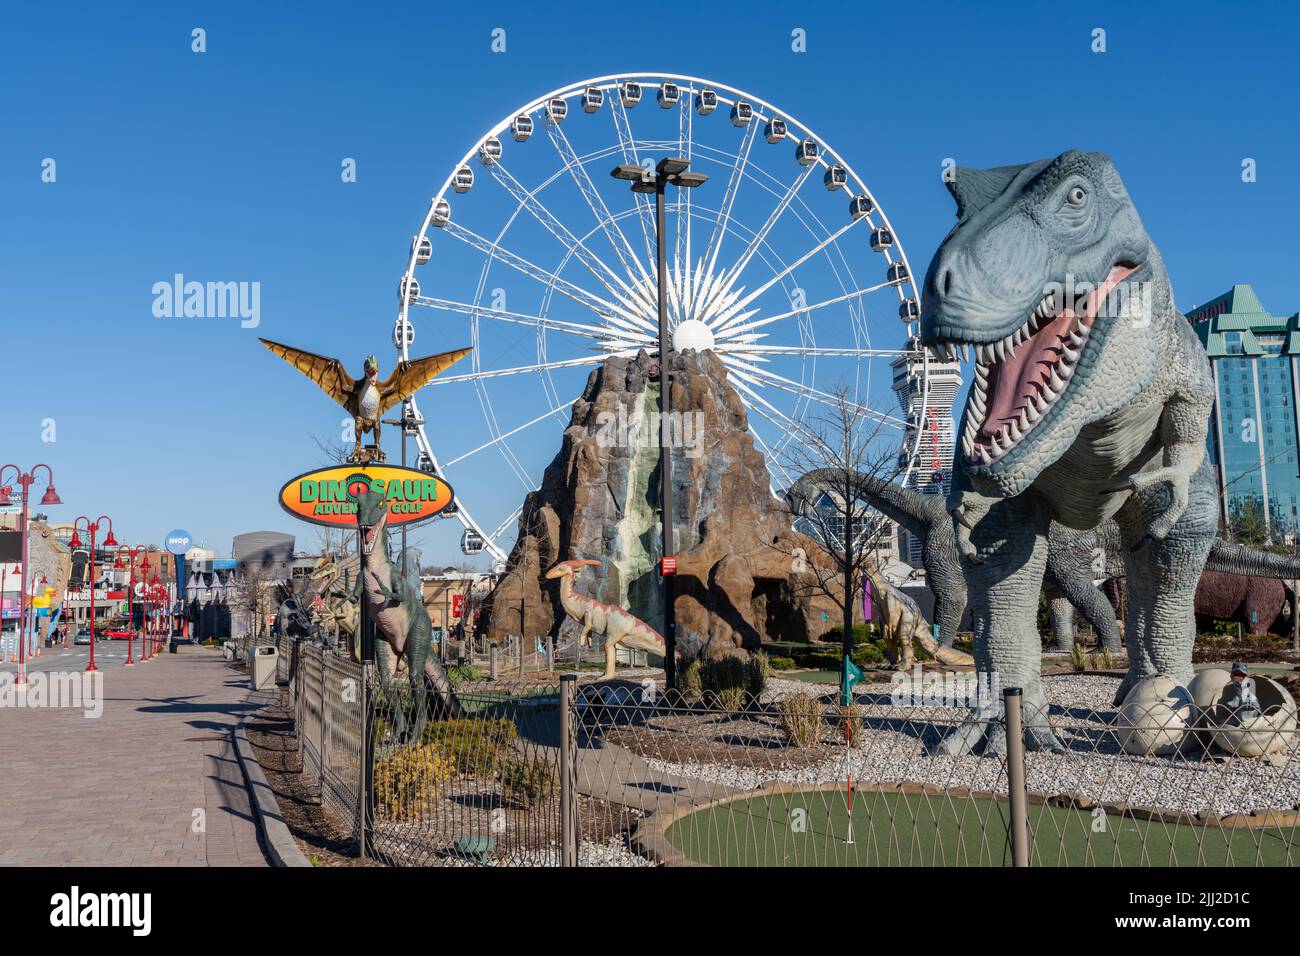 Downtown Niagara Falls City Clifton Hill amusement area. Dinosaur Adventure Golf. Skywheel ferris wheel. Stock Photo